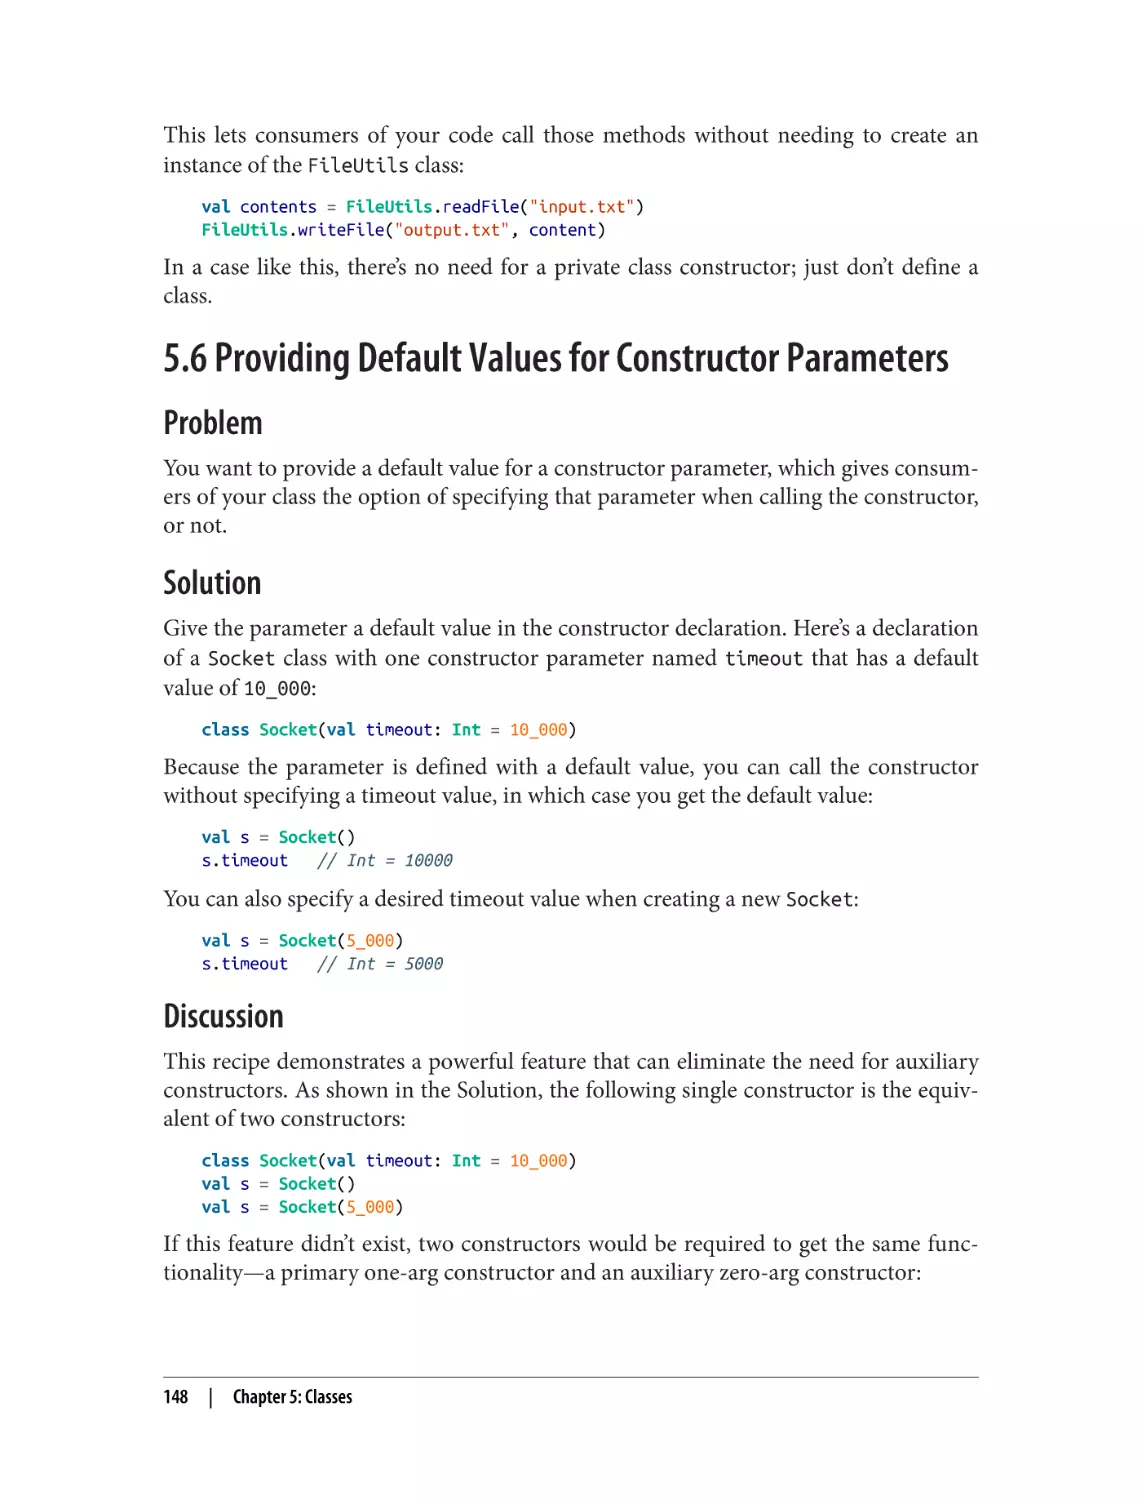 5.6 Providing Default Values for Constructor Parameters
Problem
Solution
Discussion